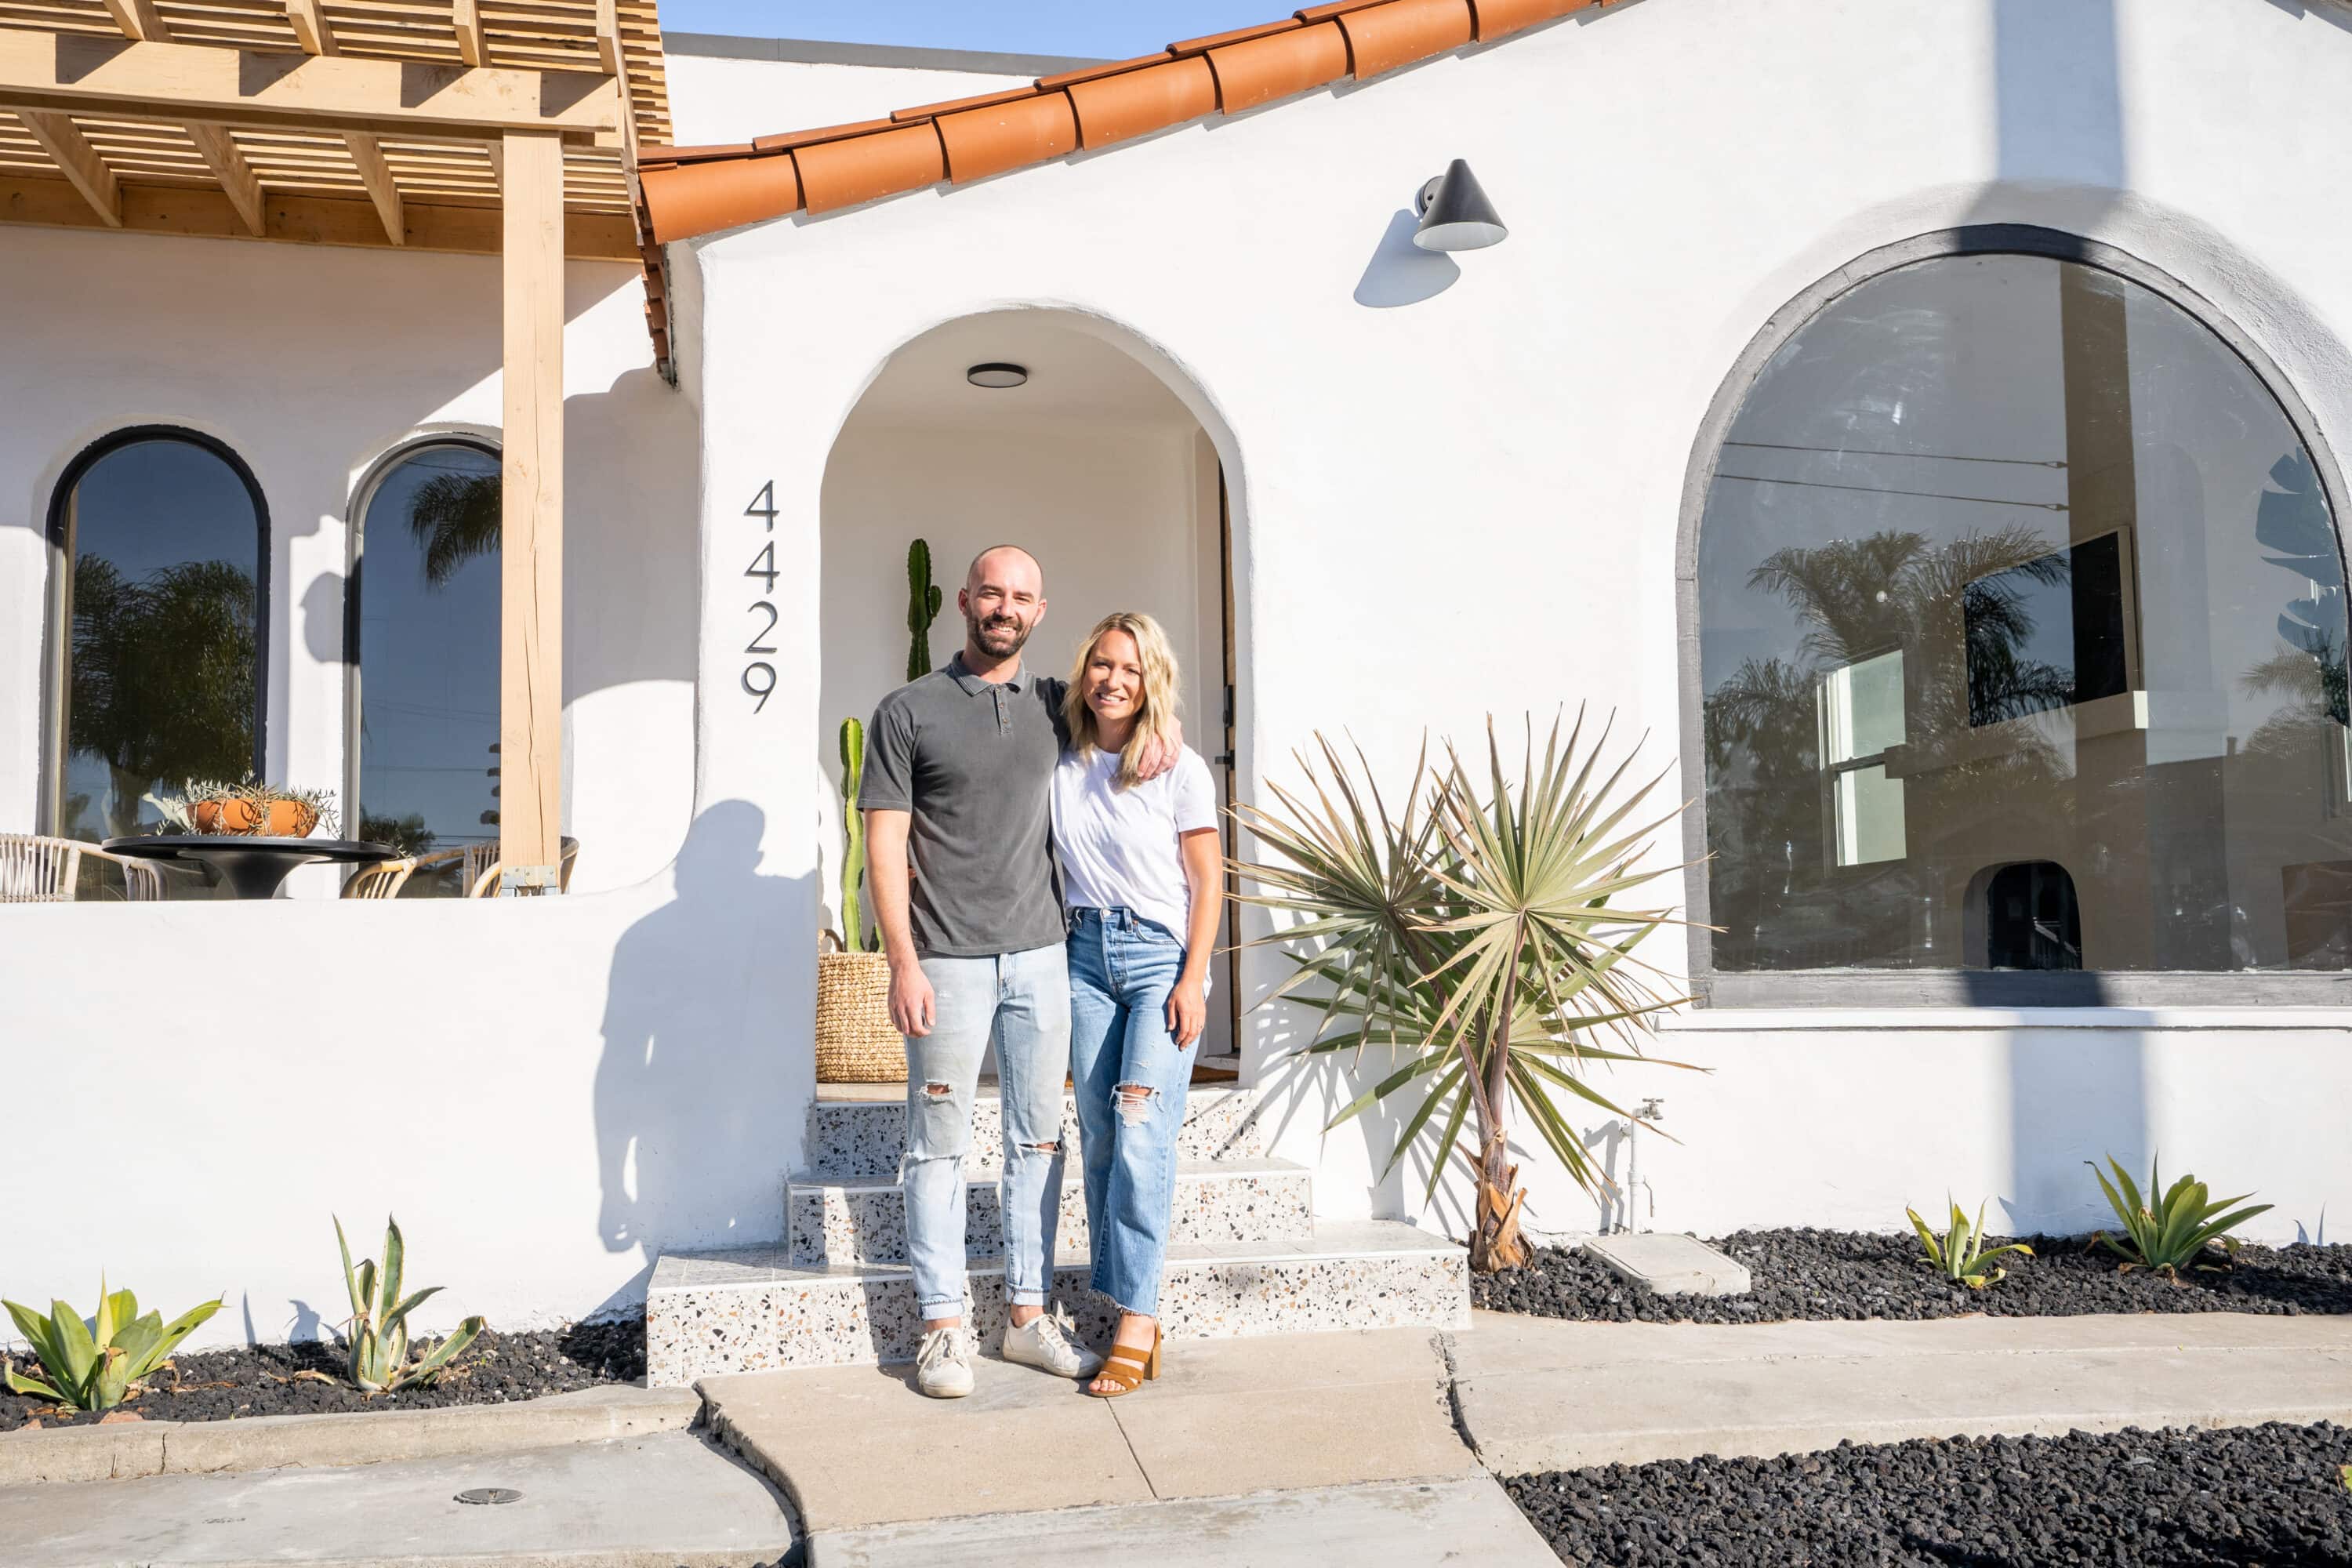 Dan and Brittany's modern California bungalow